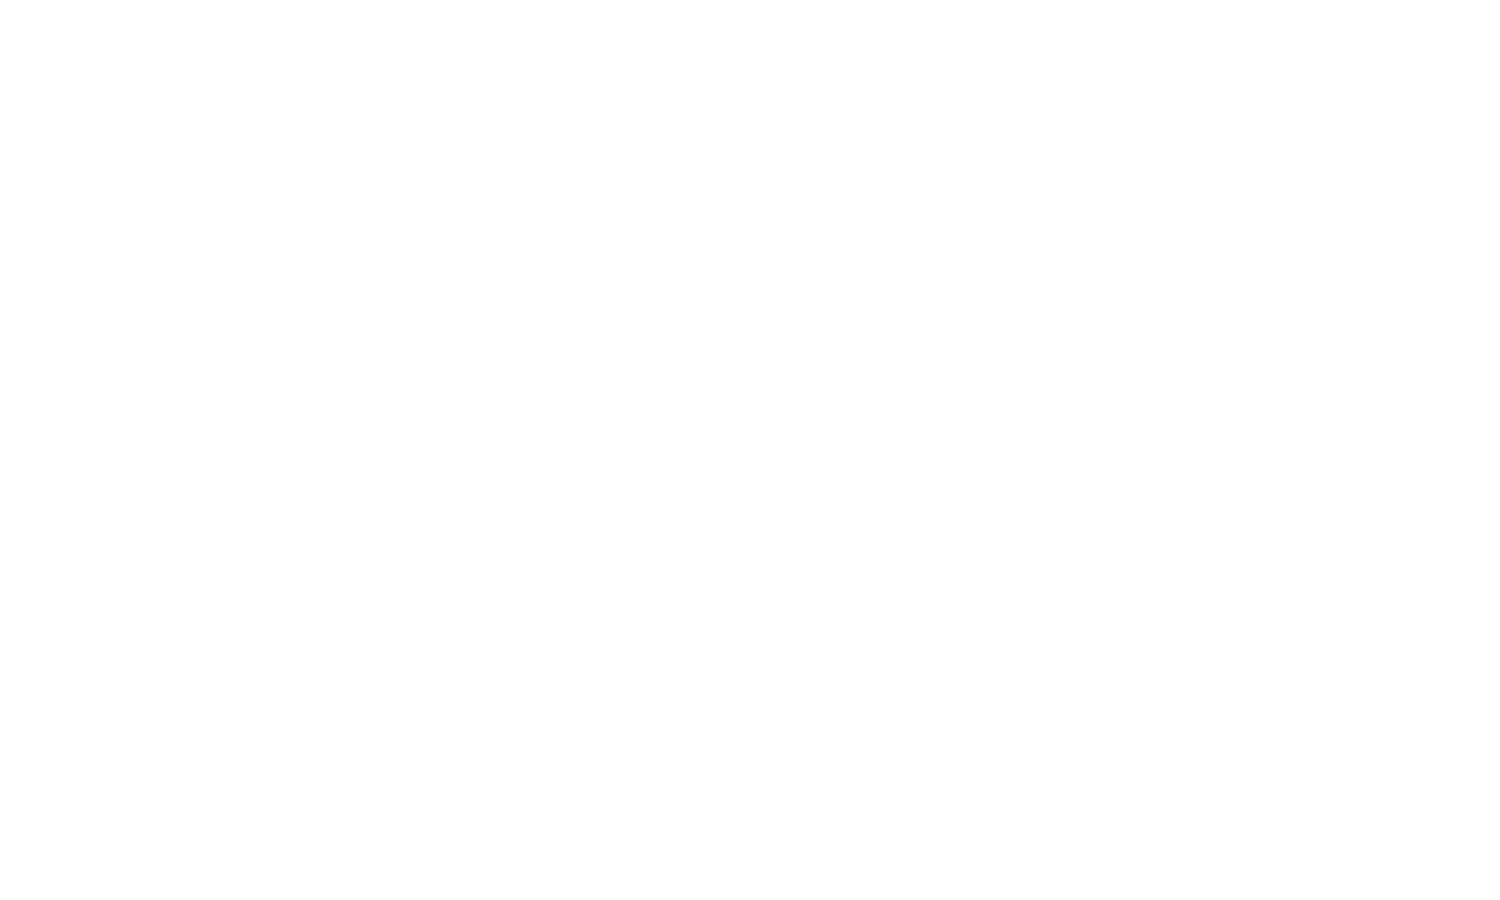 Auto Buying Consultants of Maine